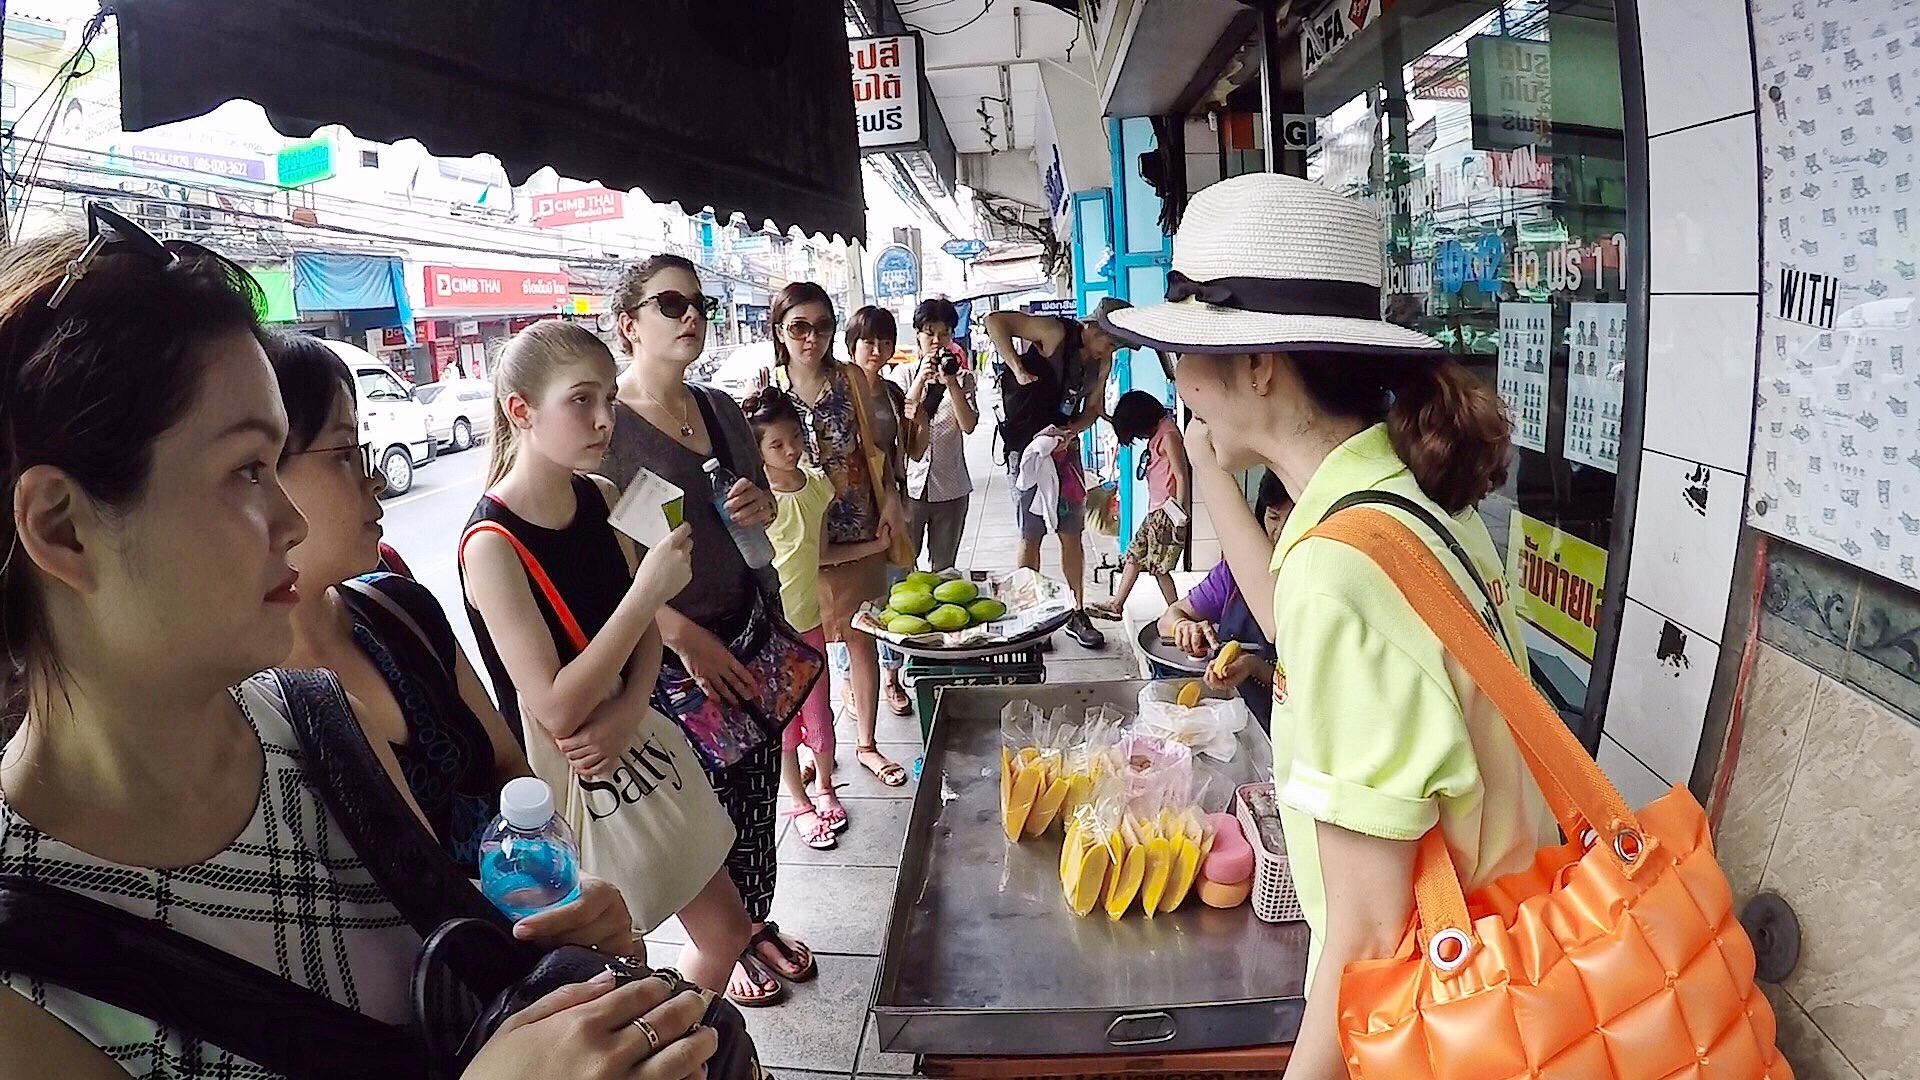 Bangkok Food Tours